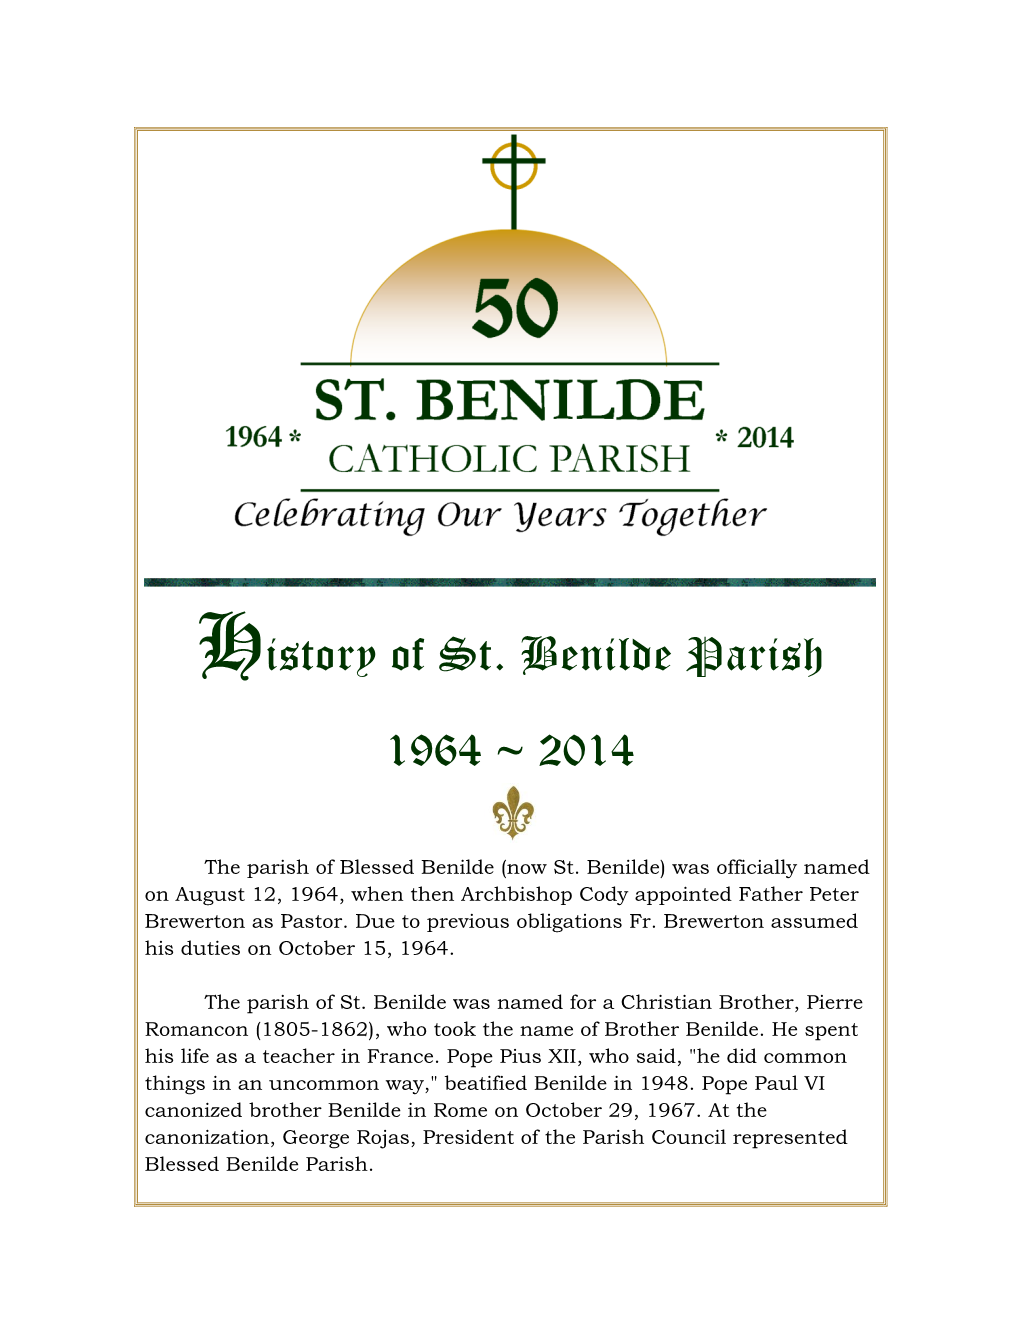 History of St. Benilde Parish 1964 ~ 2014